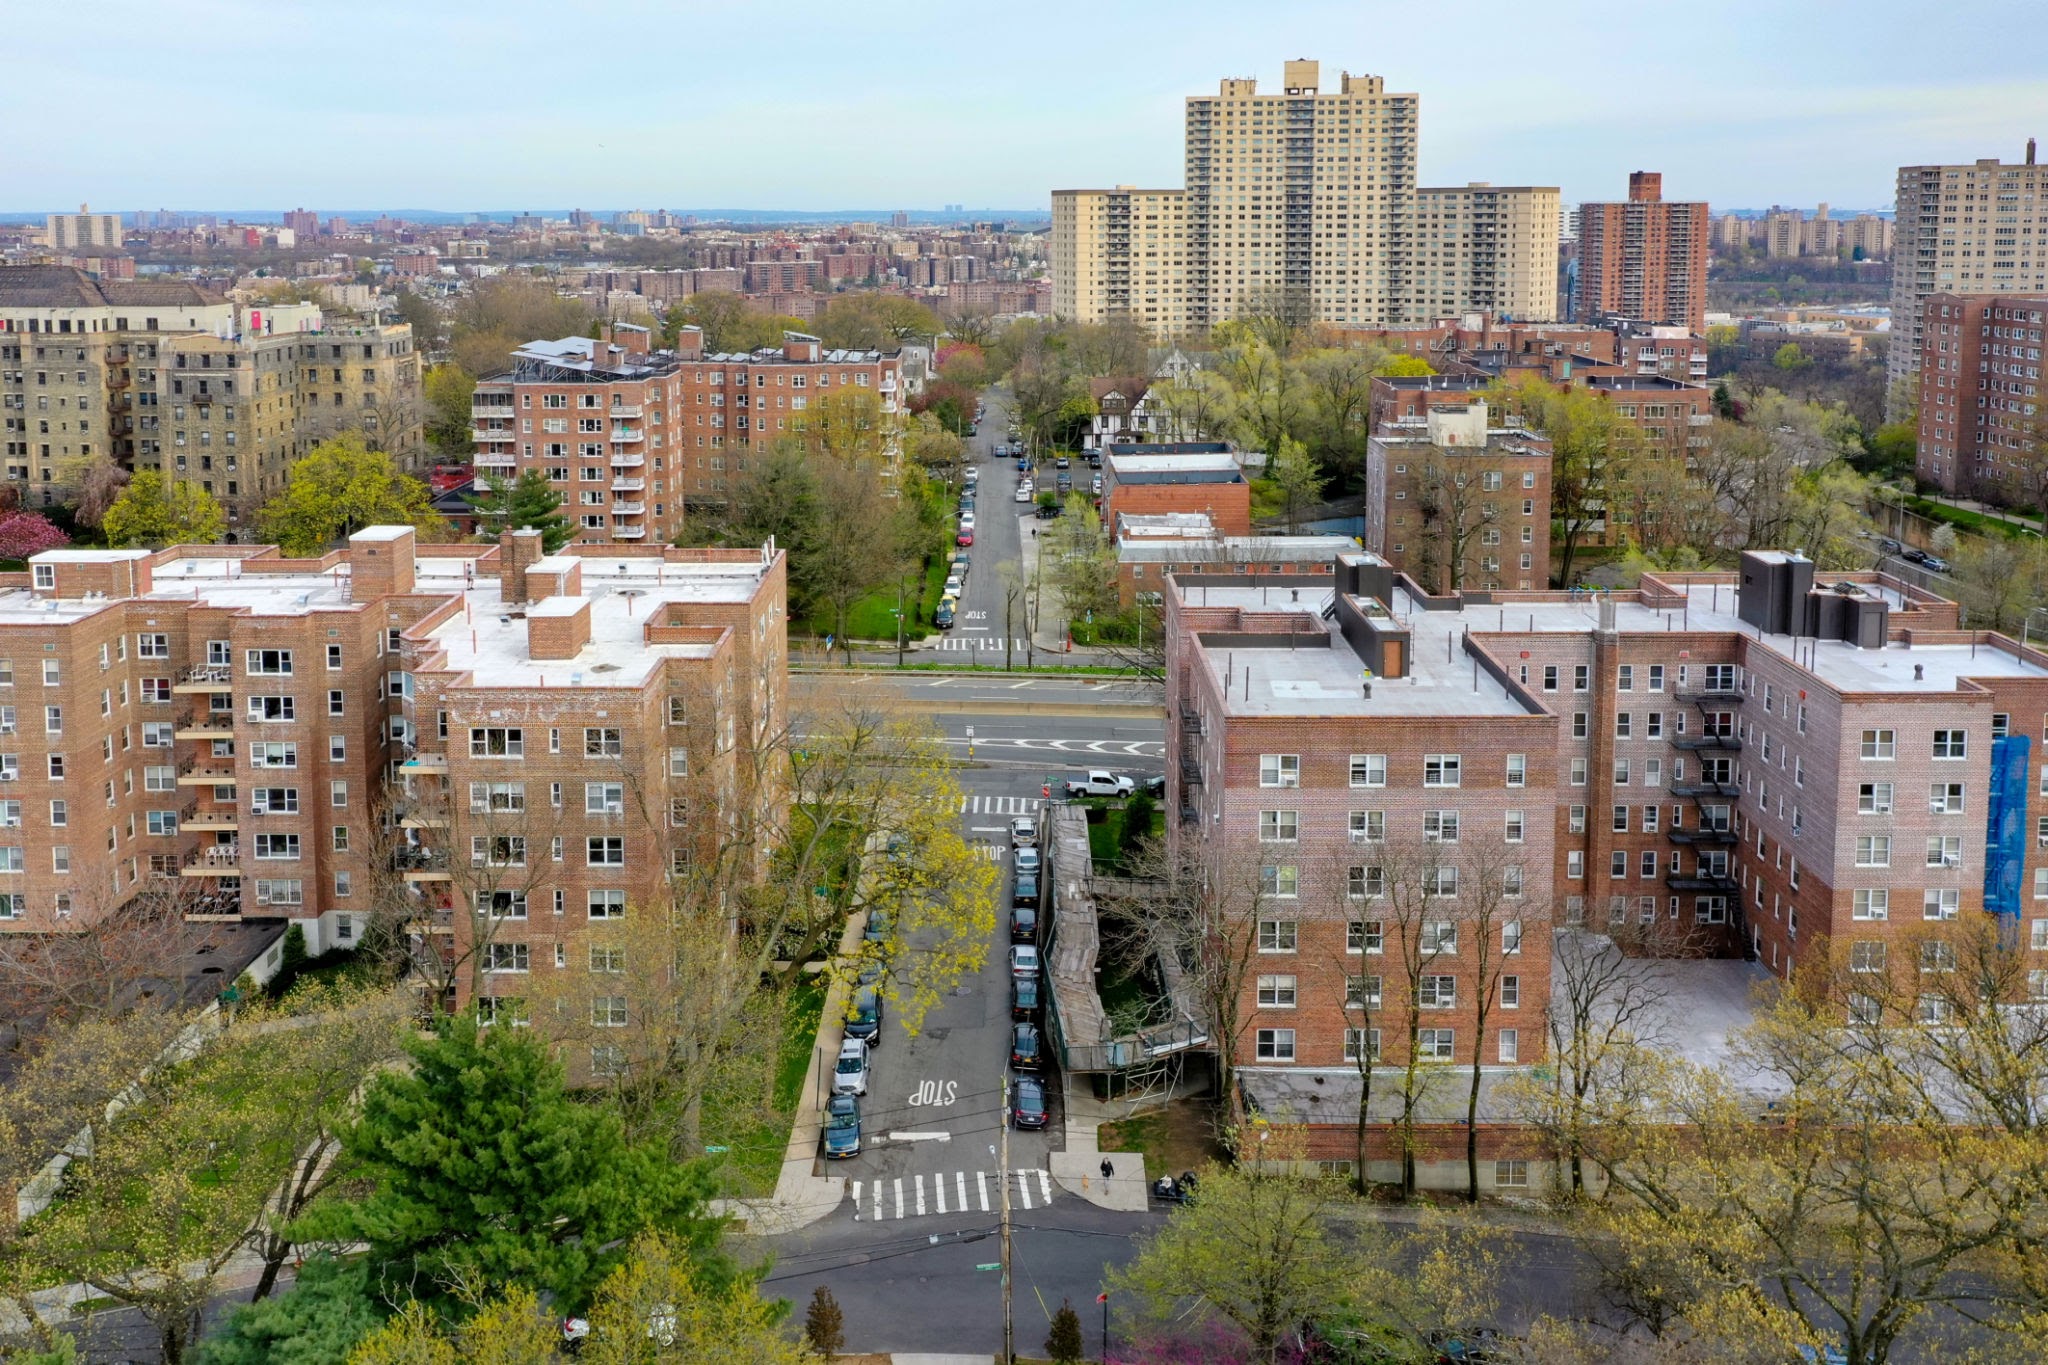 Aerial view of the Spuyten Devil neighborhood of the Bronx, New York.